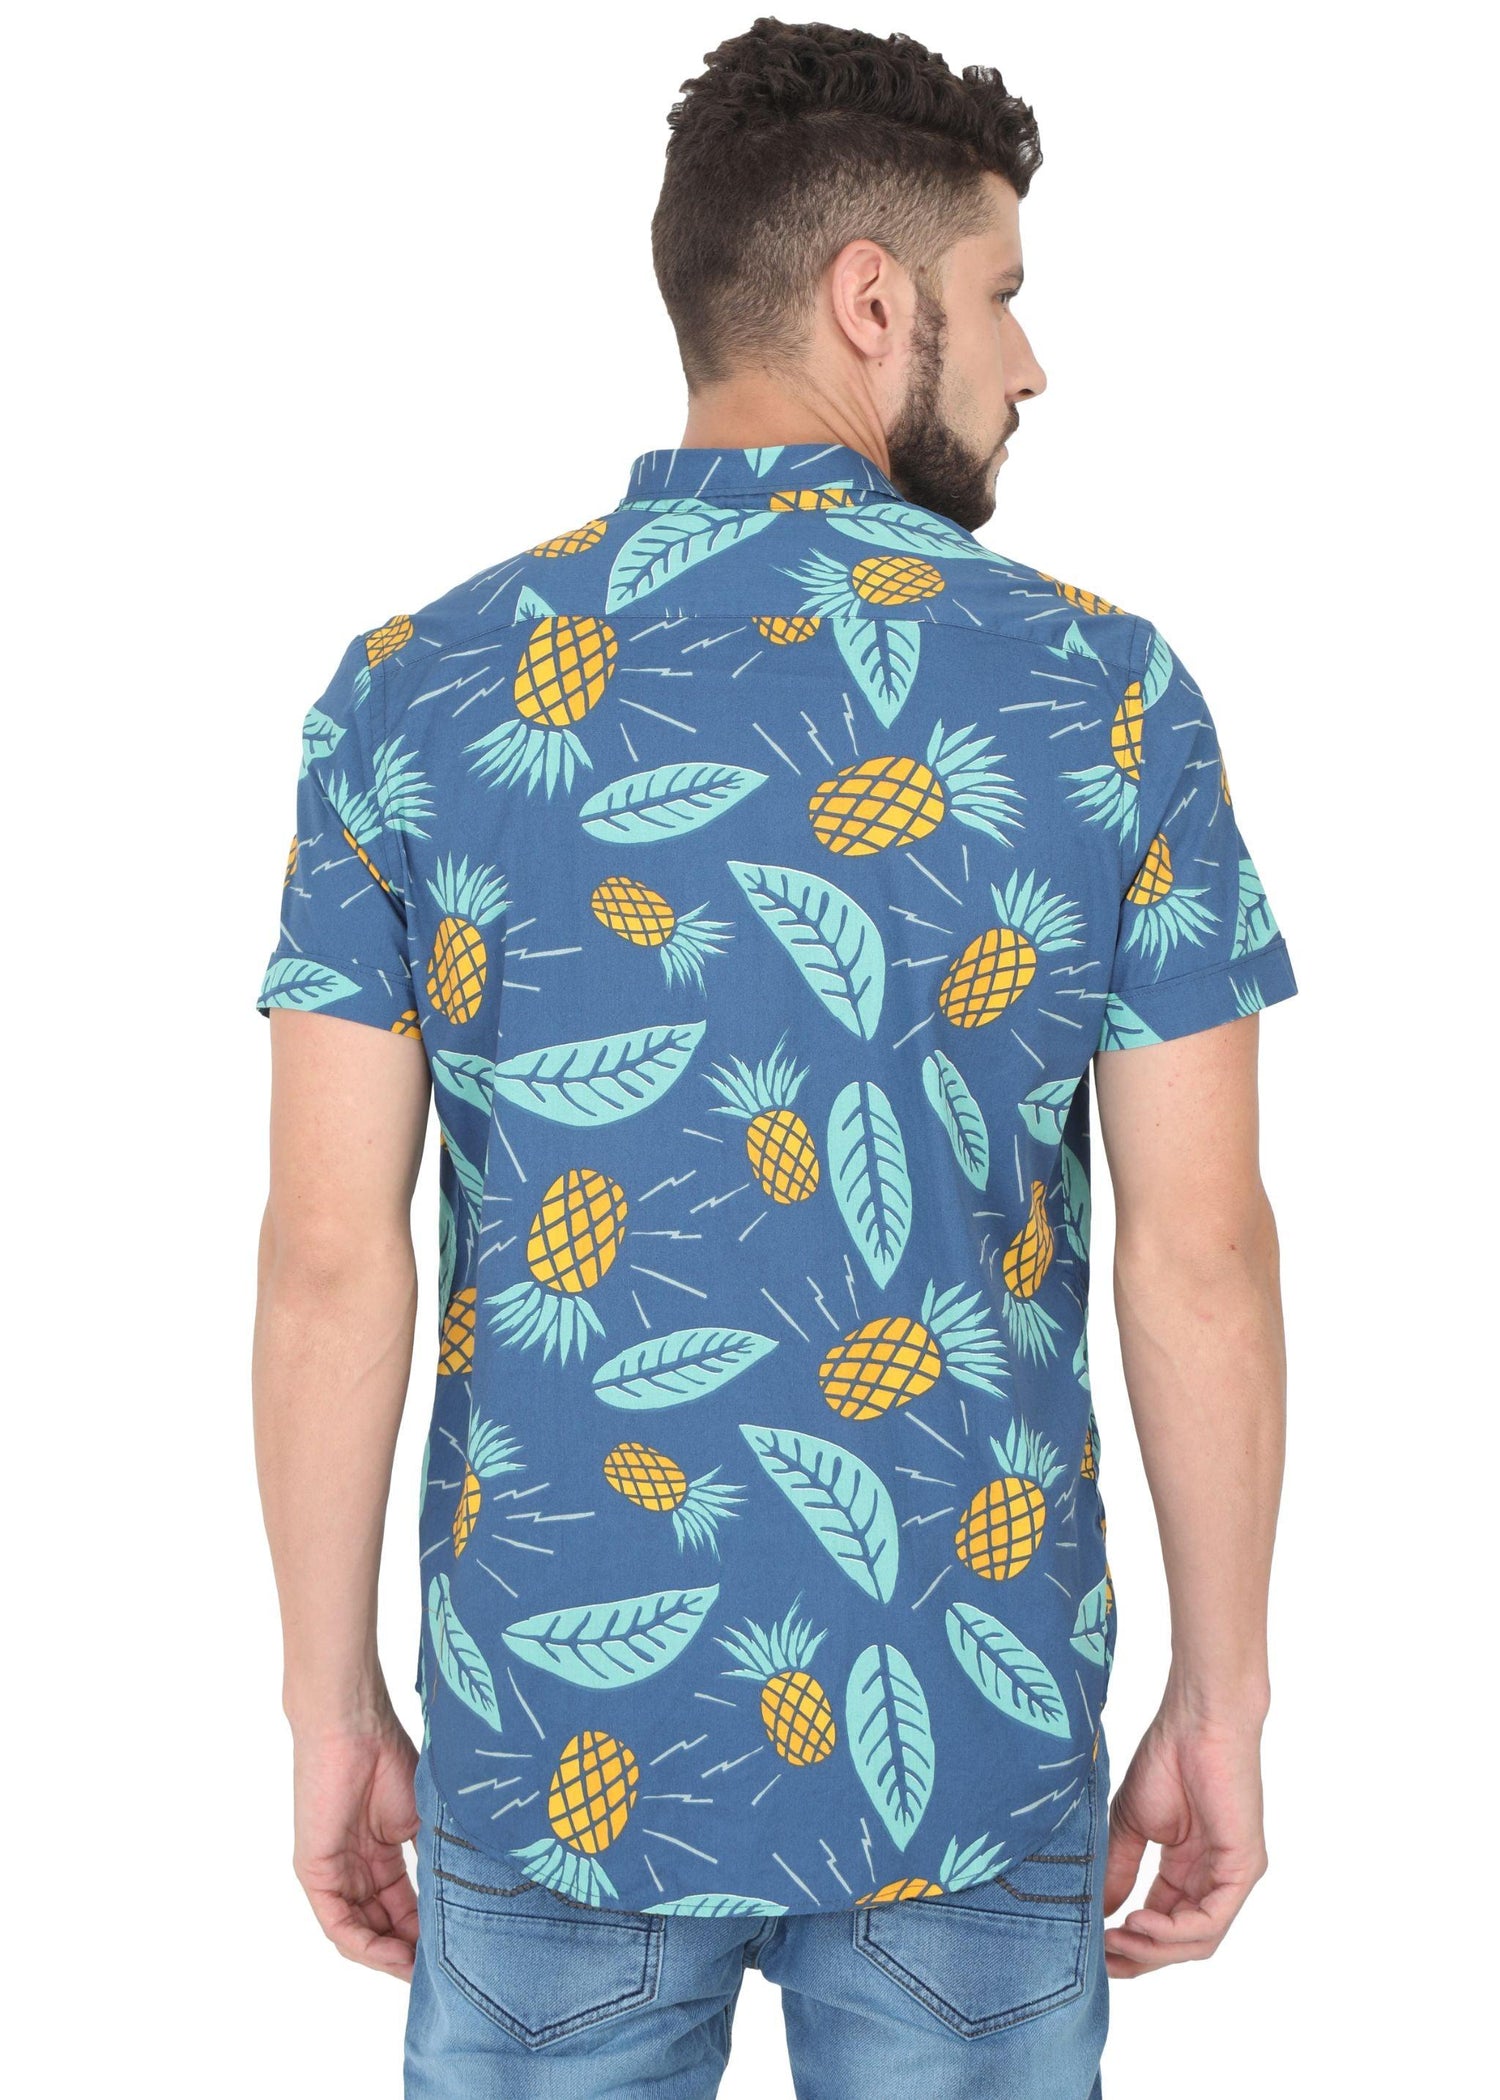 Tusok-blue-pineappleFeatured Shirt, Vacation-Printed Shirtimage-Blue Pineapple (4)